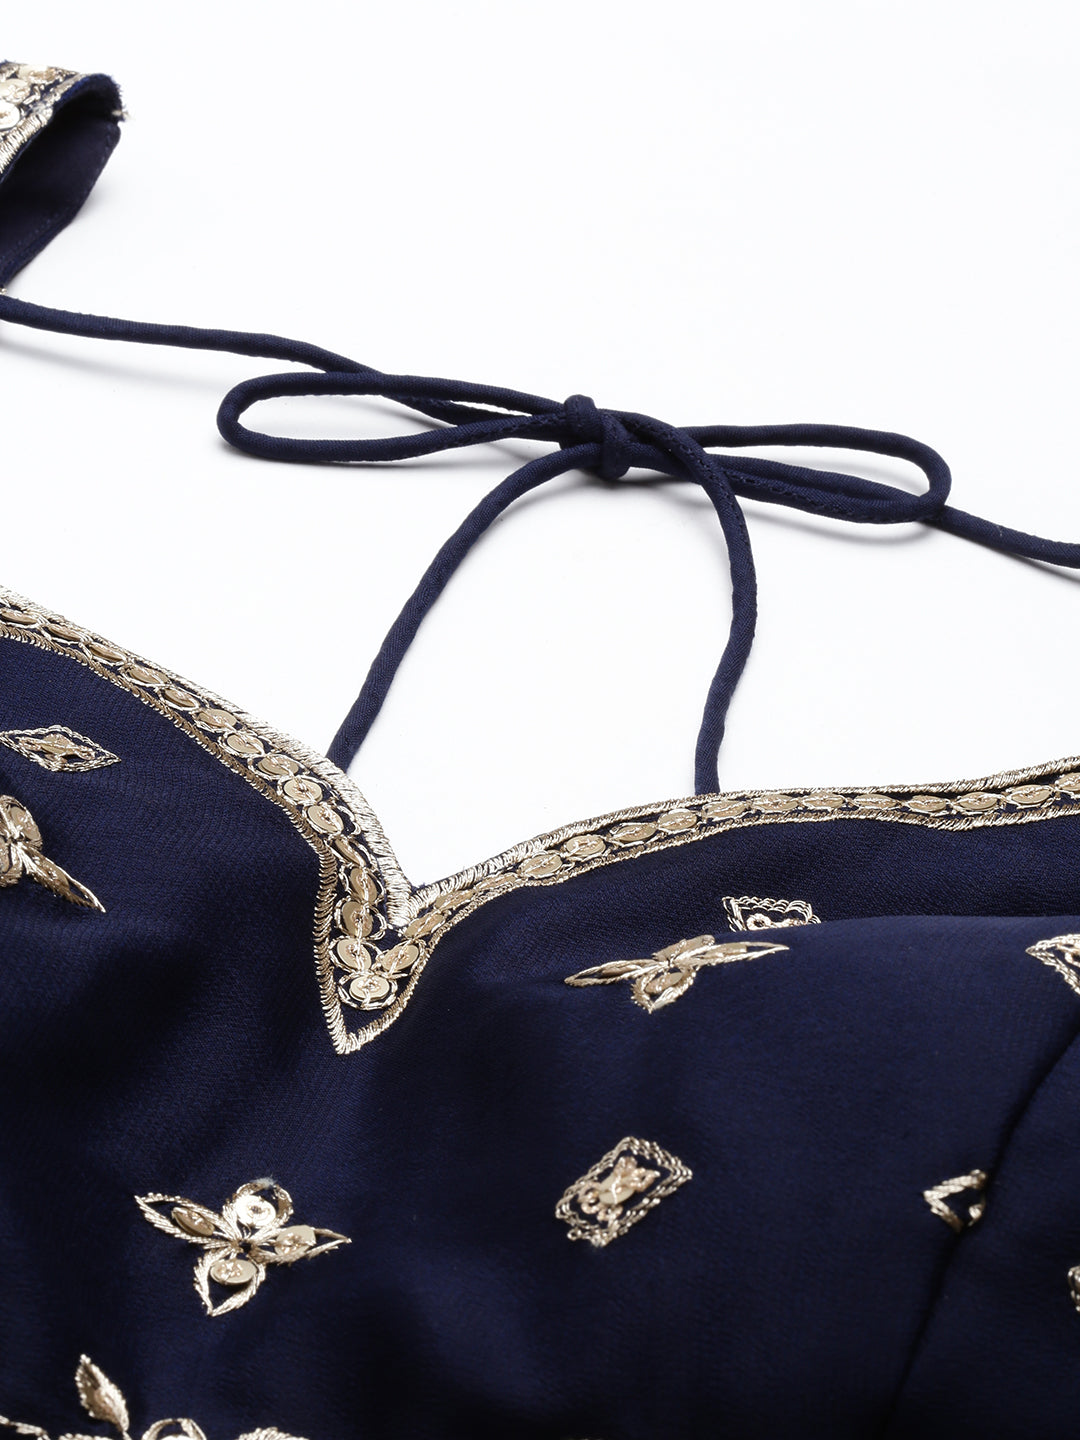 Women's Navy Blue Pure Georgette Embroidered Lehenga & Blouse, Dupatta - Royal Dwells